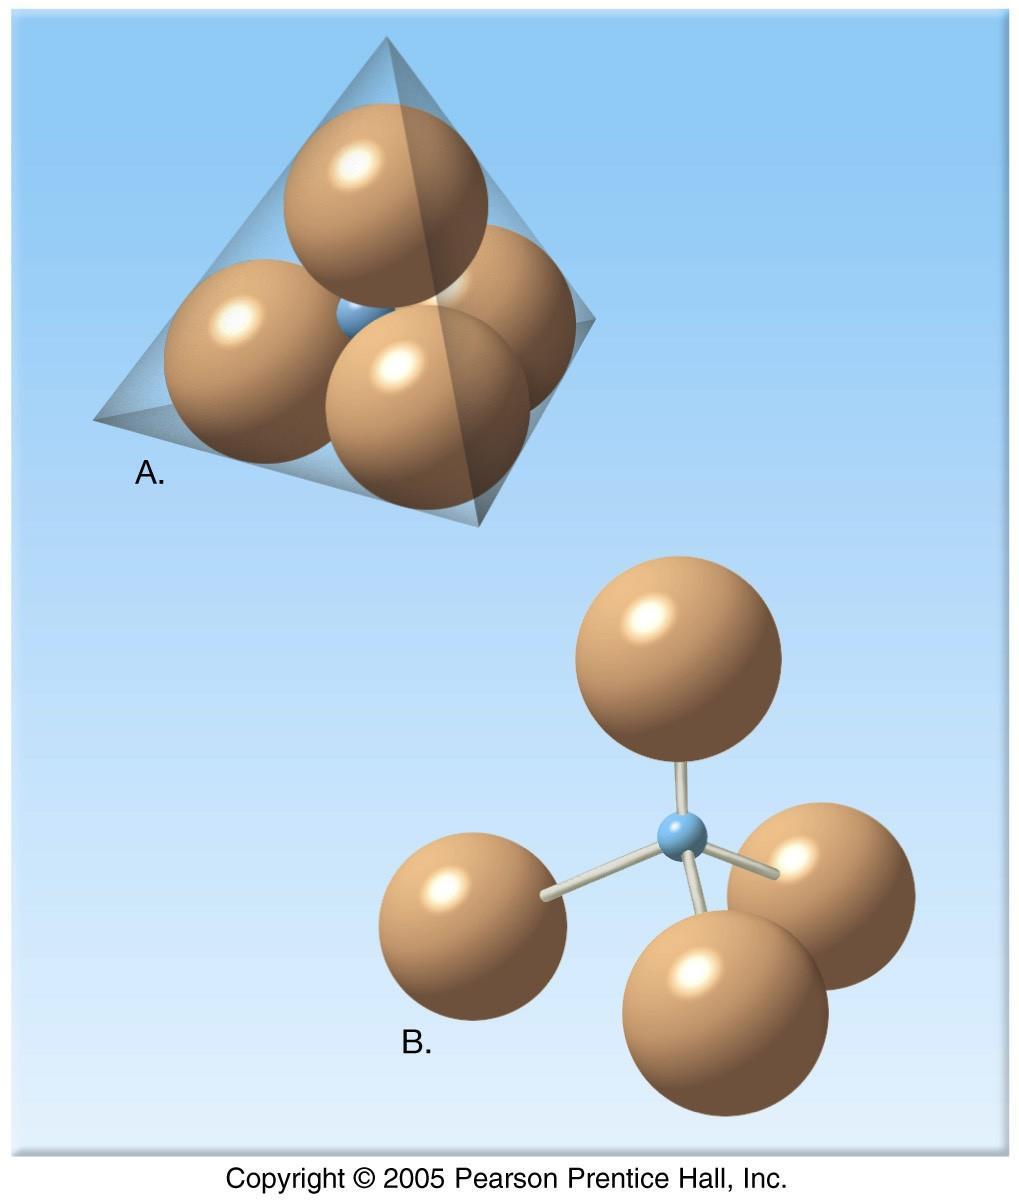 Si O Tetrahedron Fe, Mg, K, Na and Ca bond the silicate